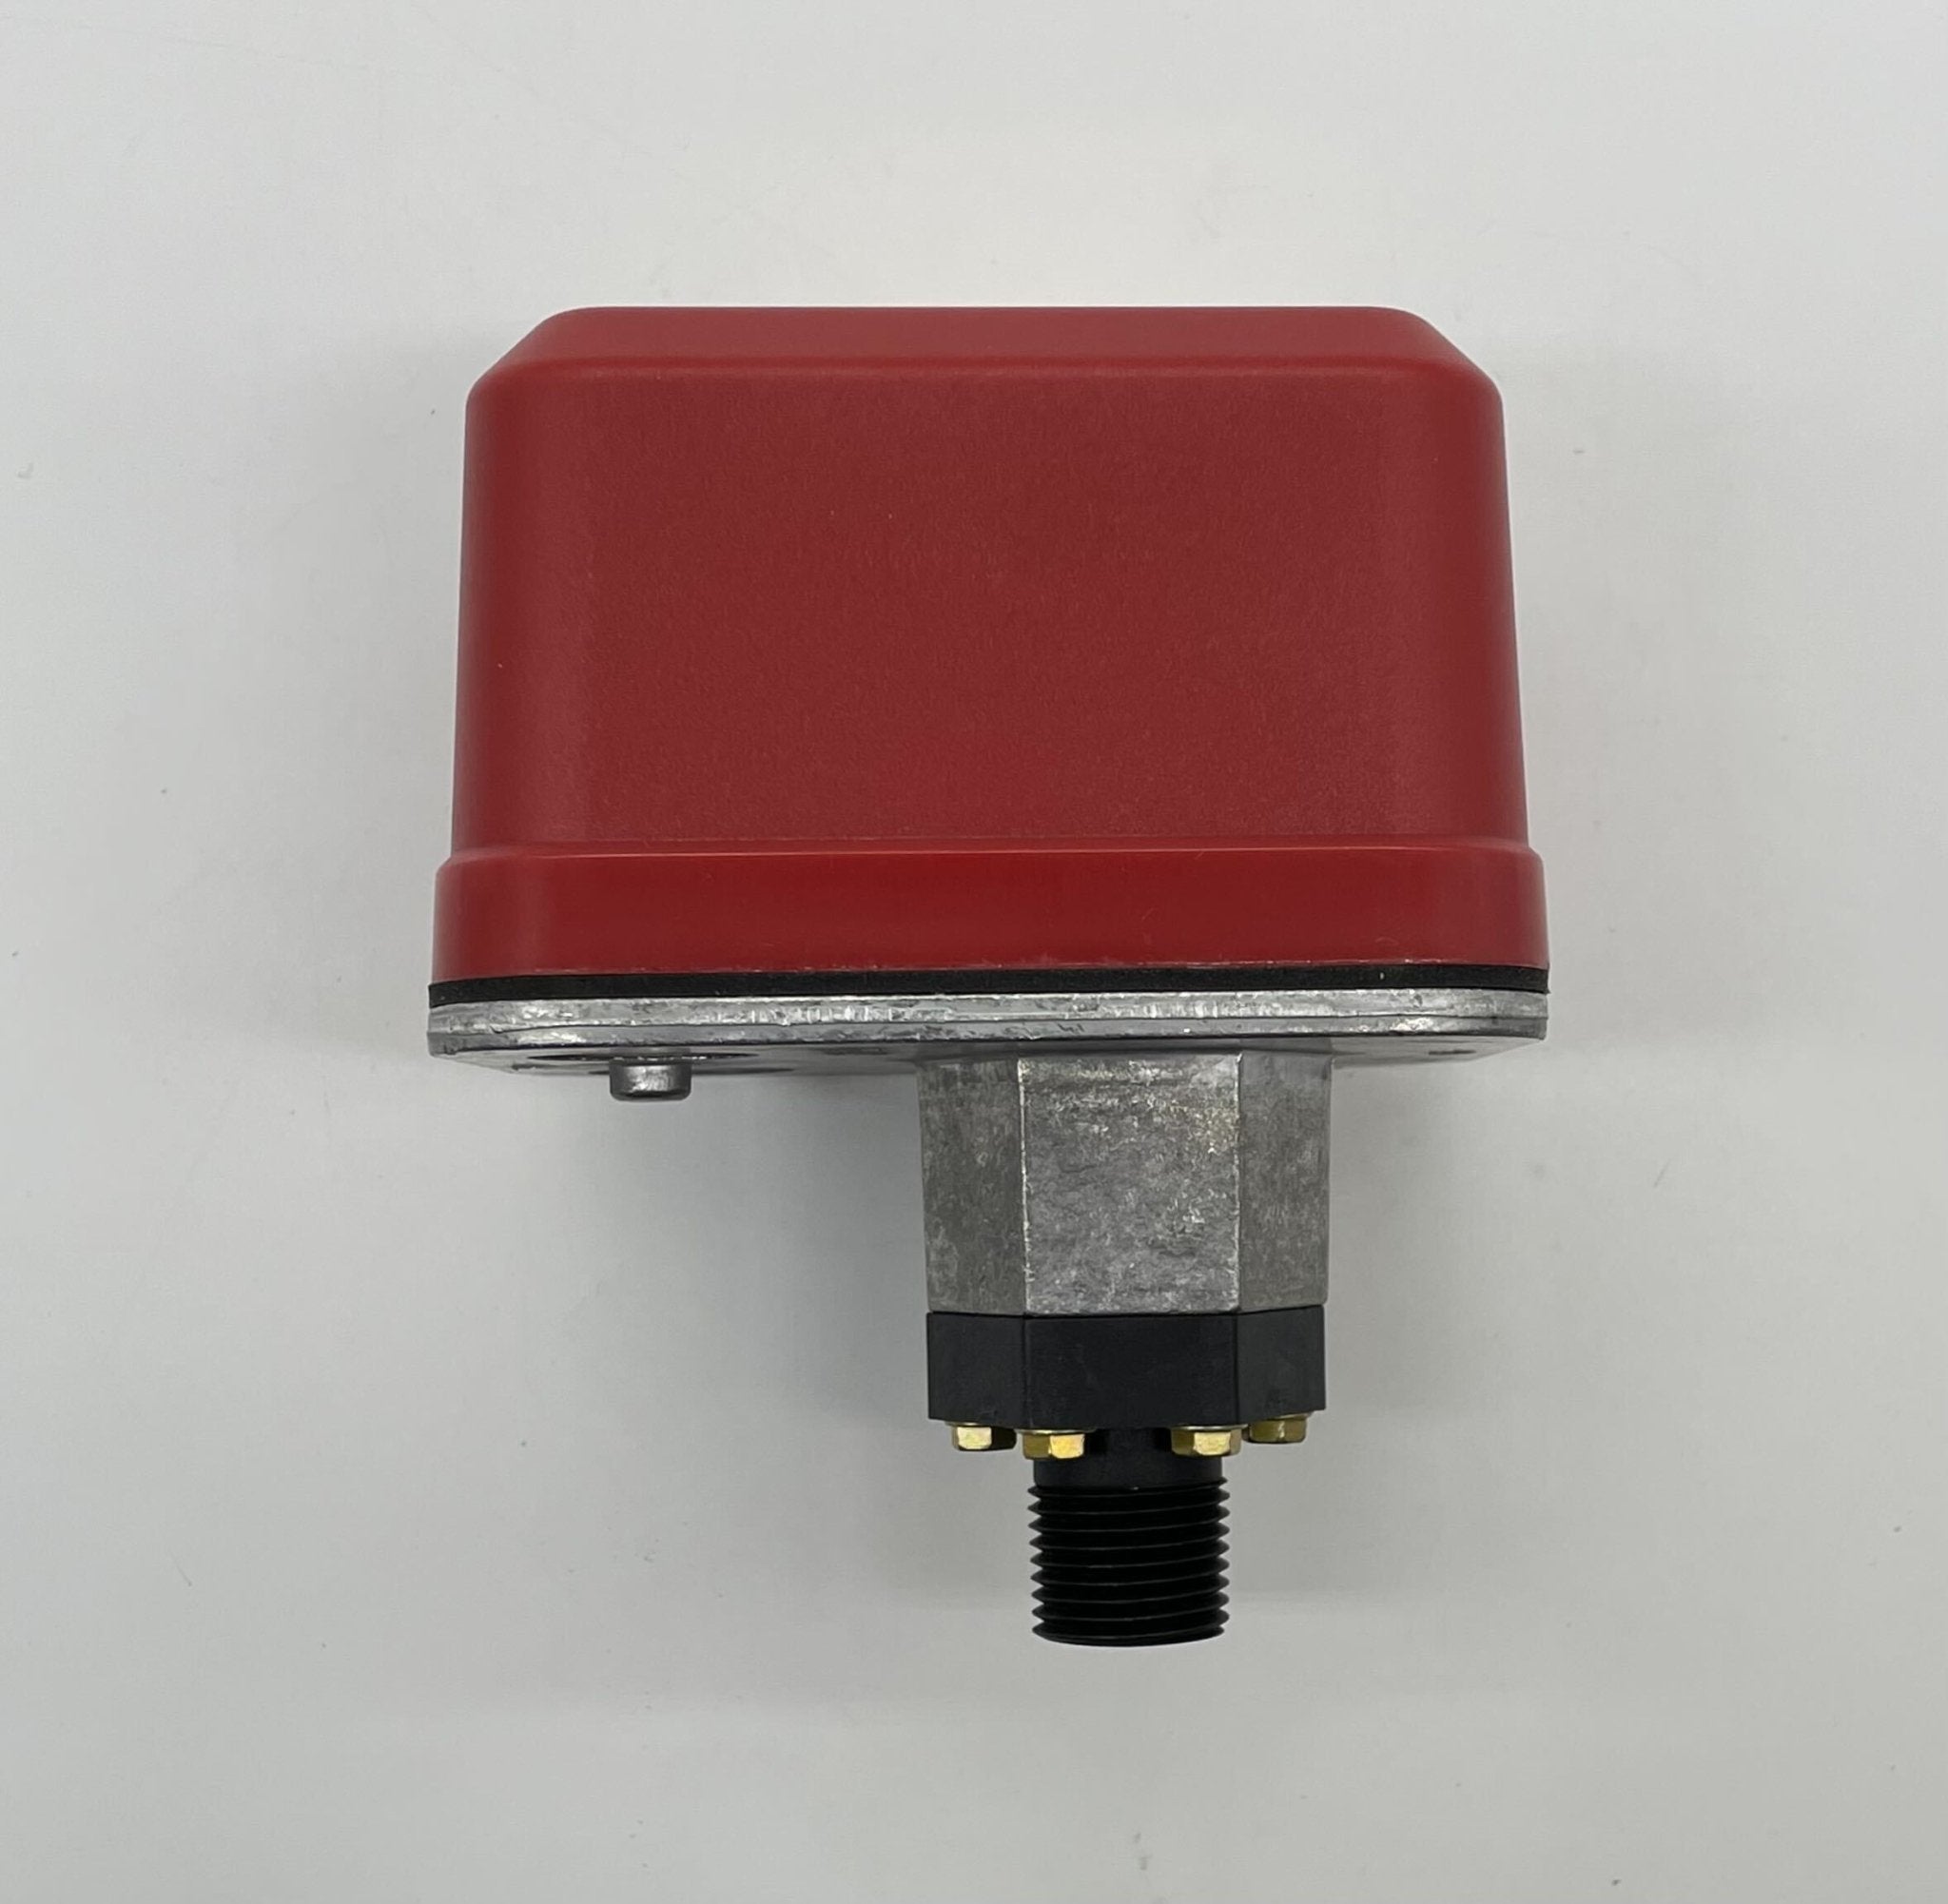 System Sensor EPS10-2 - The Fire Alarm Supplier